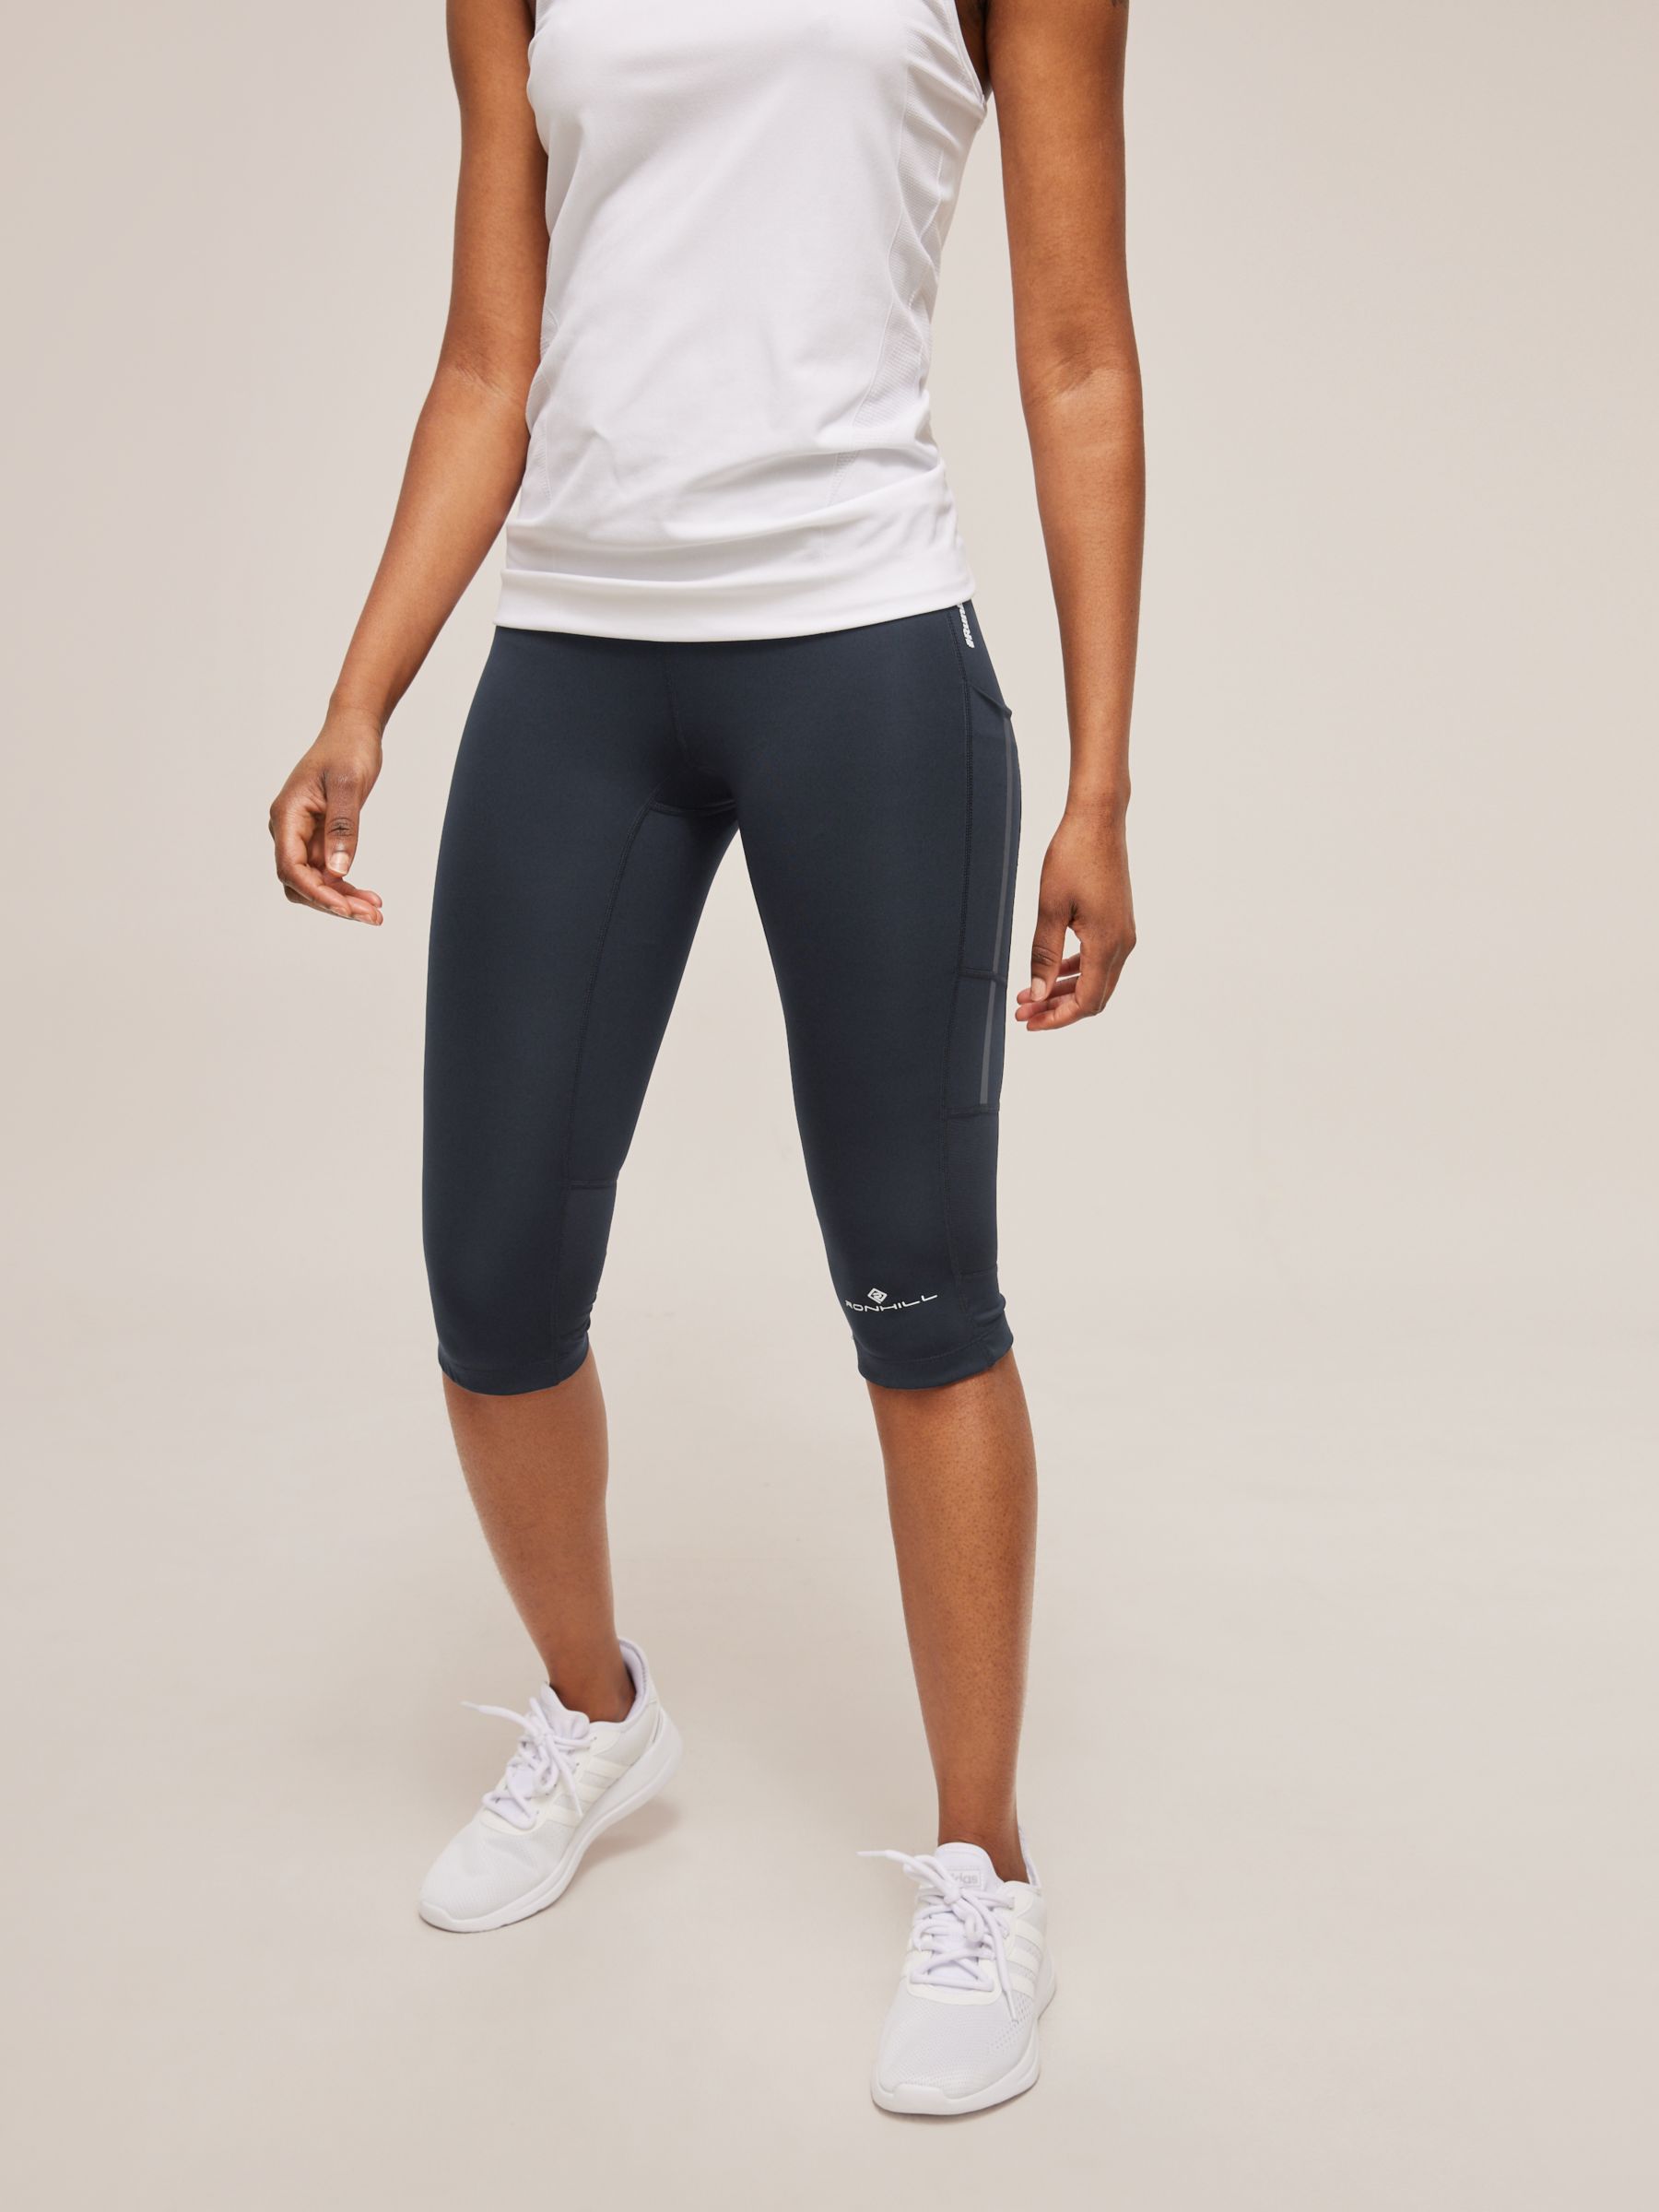 Spiro Ladies Fitness Capri Pants - Shirtworks